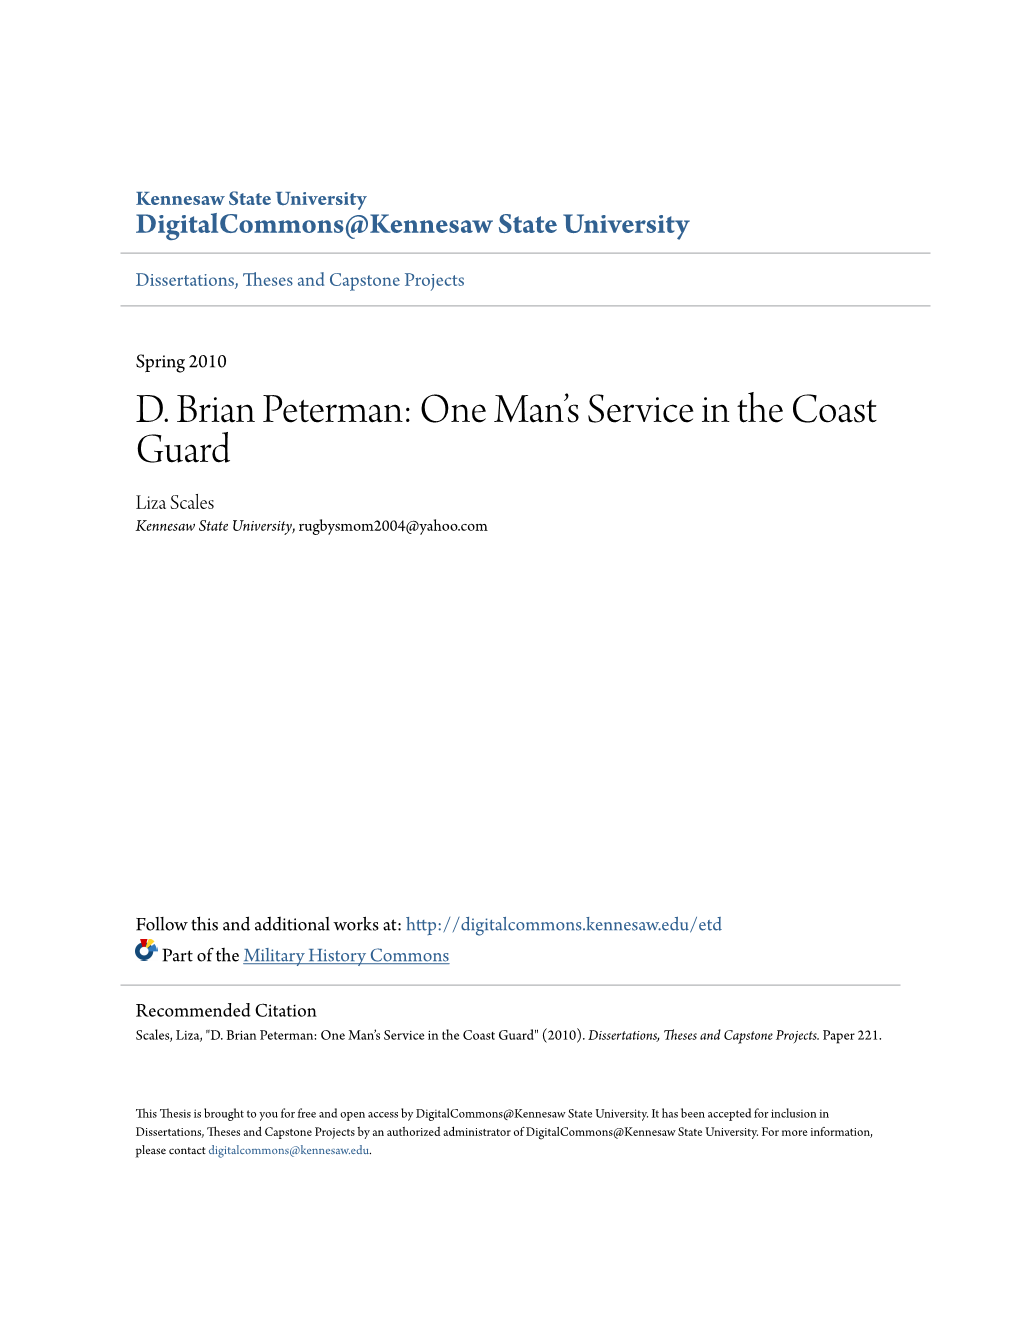 D. Brian Peterman: One Man's Service in the Coast Guard